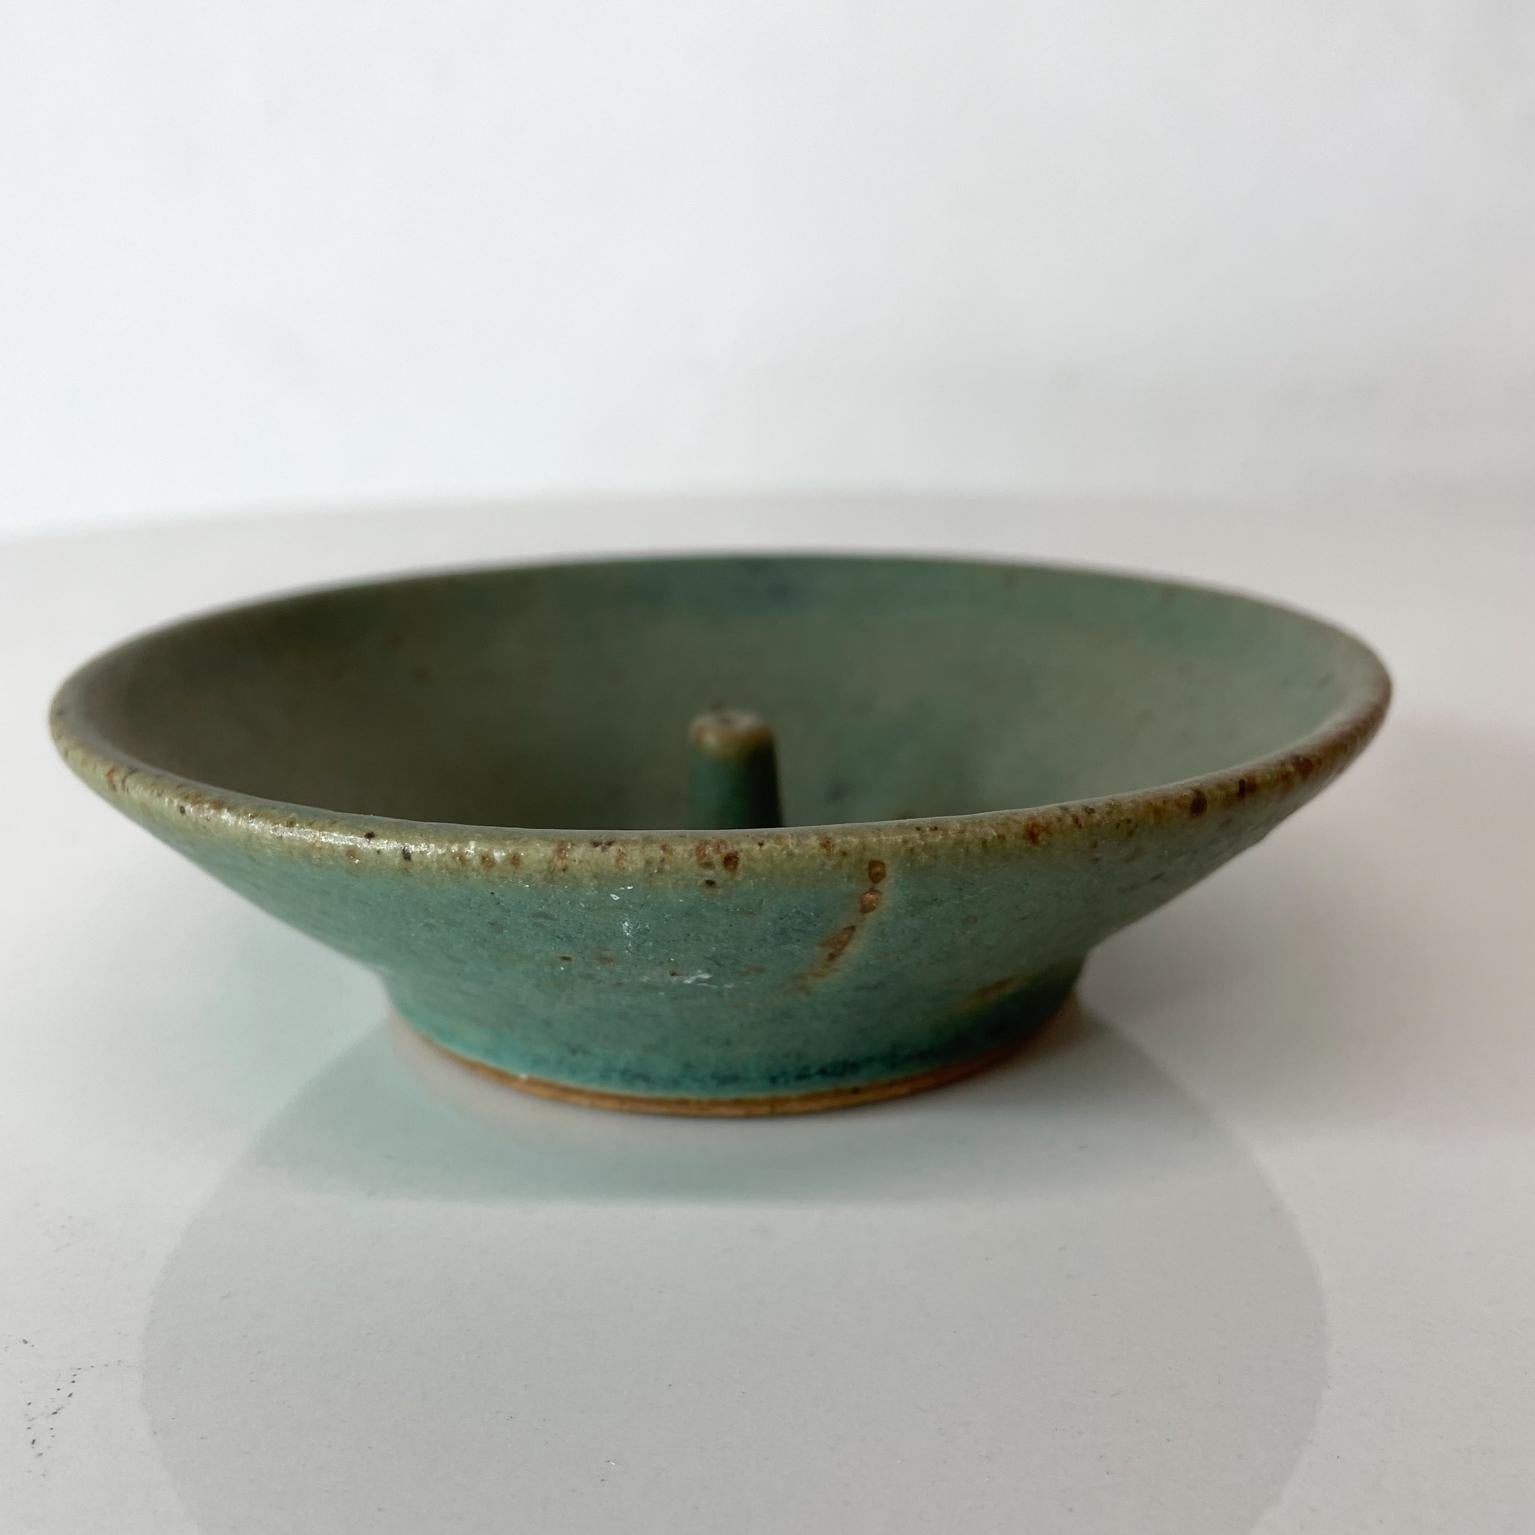 Mid-Century Modern Sculptural Stoneware Art Pottery Bowl in Fusion Green Glaze 1970s California